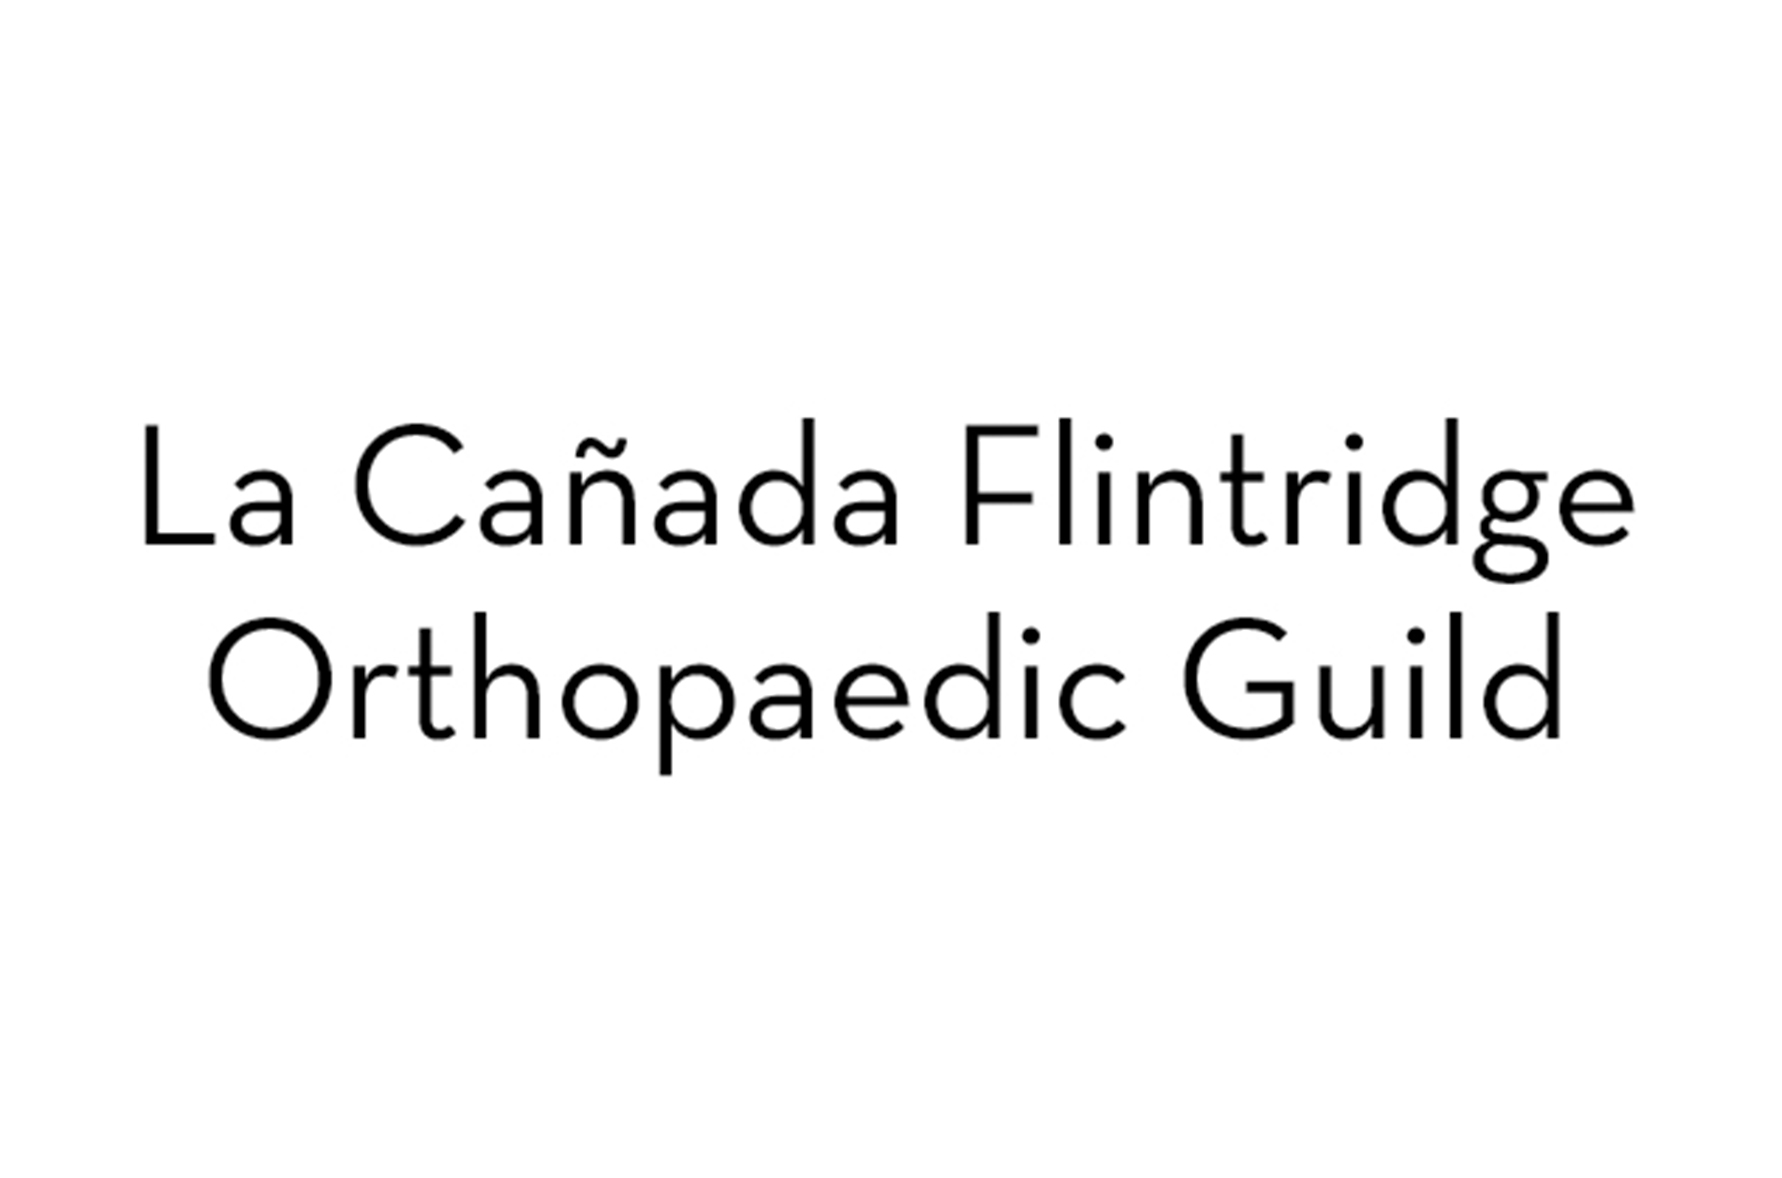 La Cañada Flintridge Orthopaedic Guild